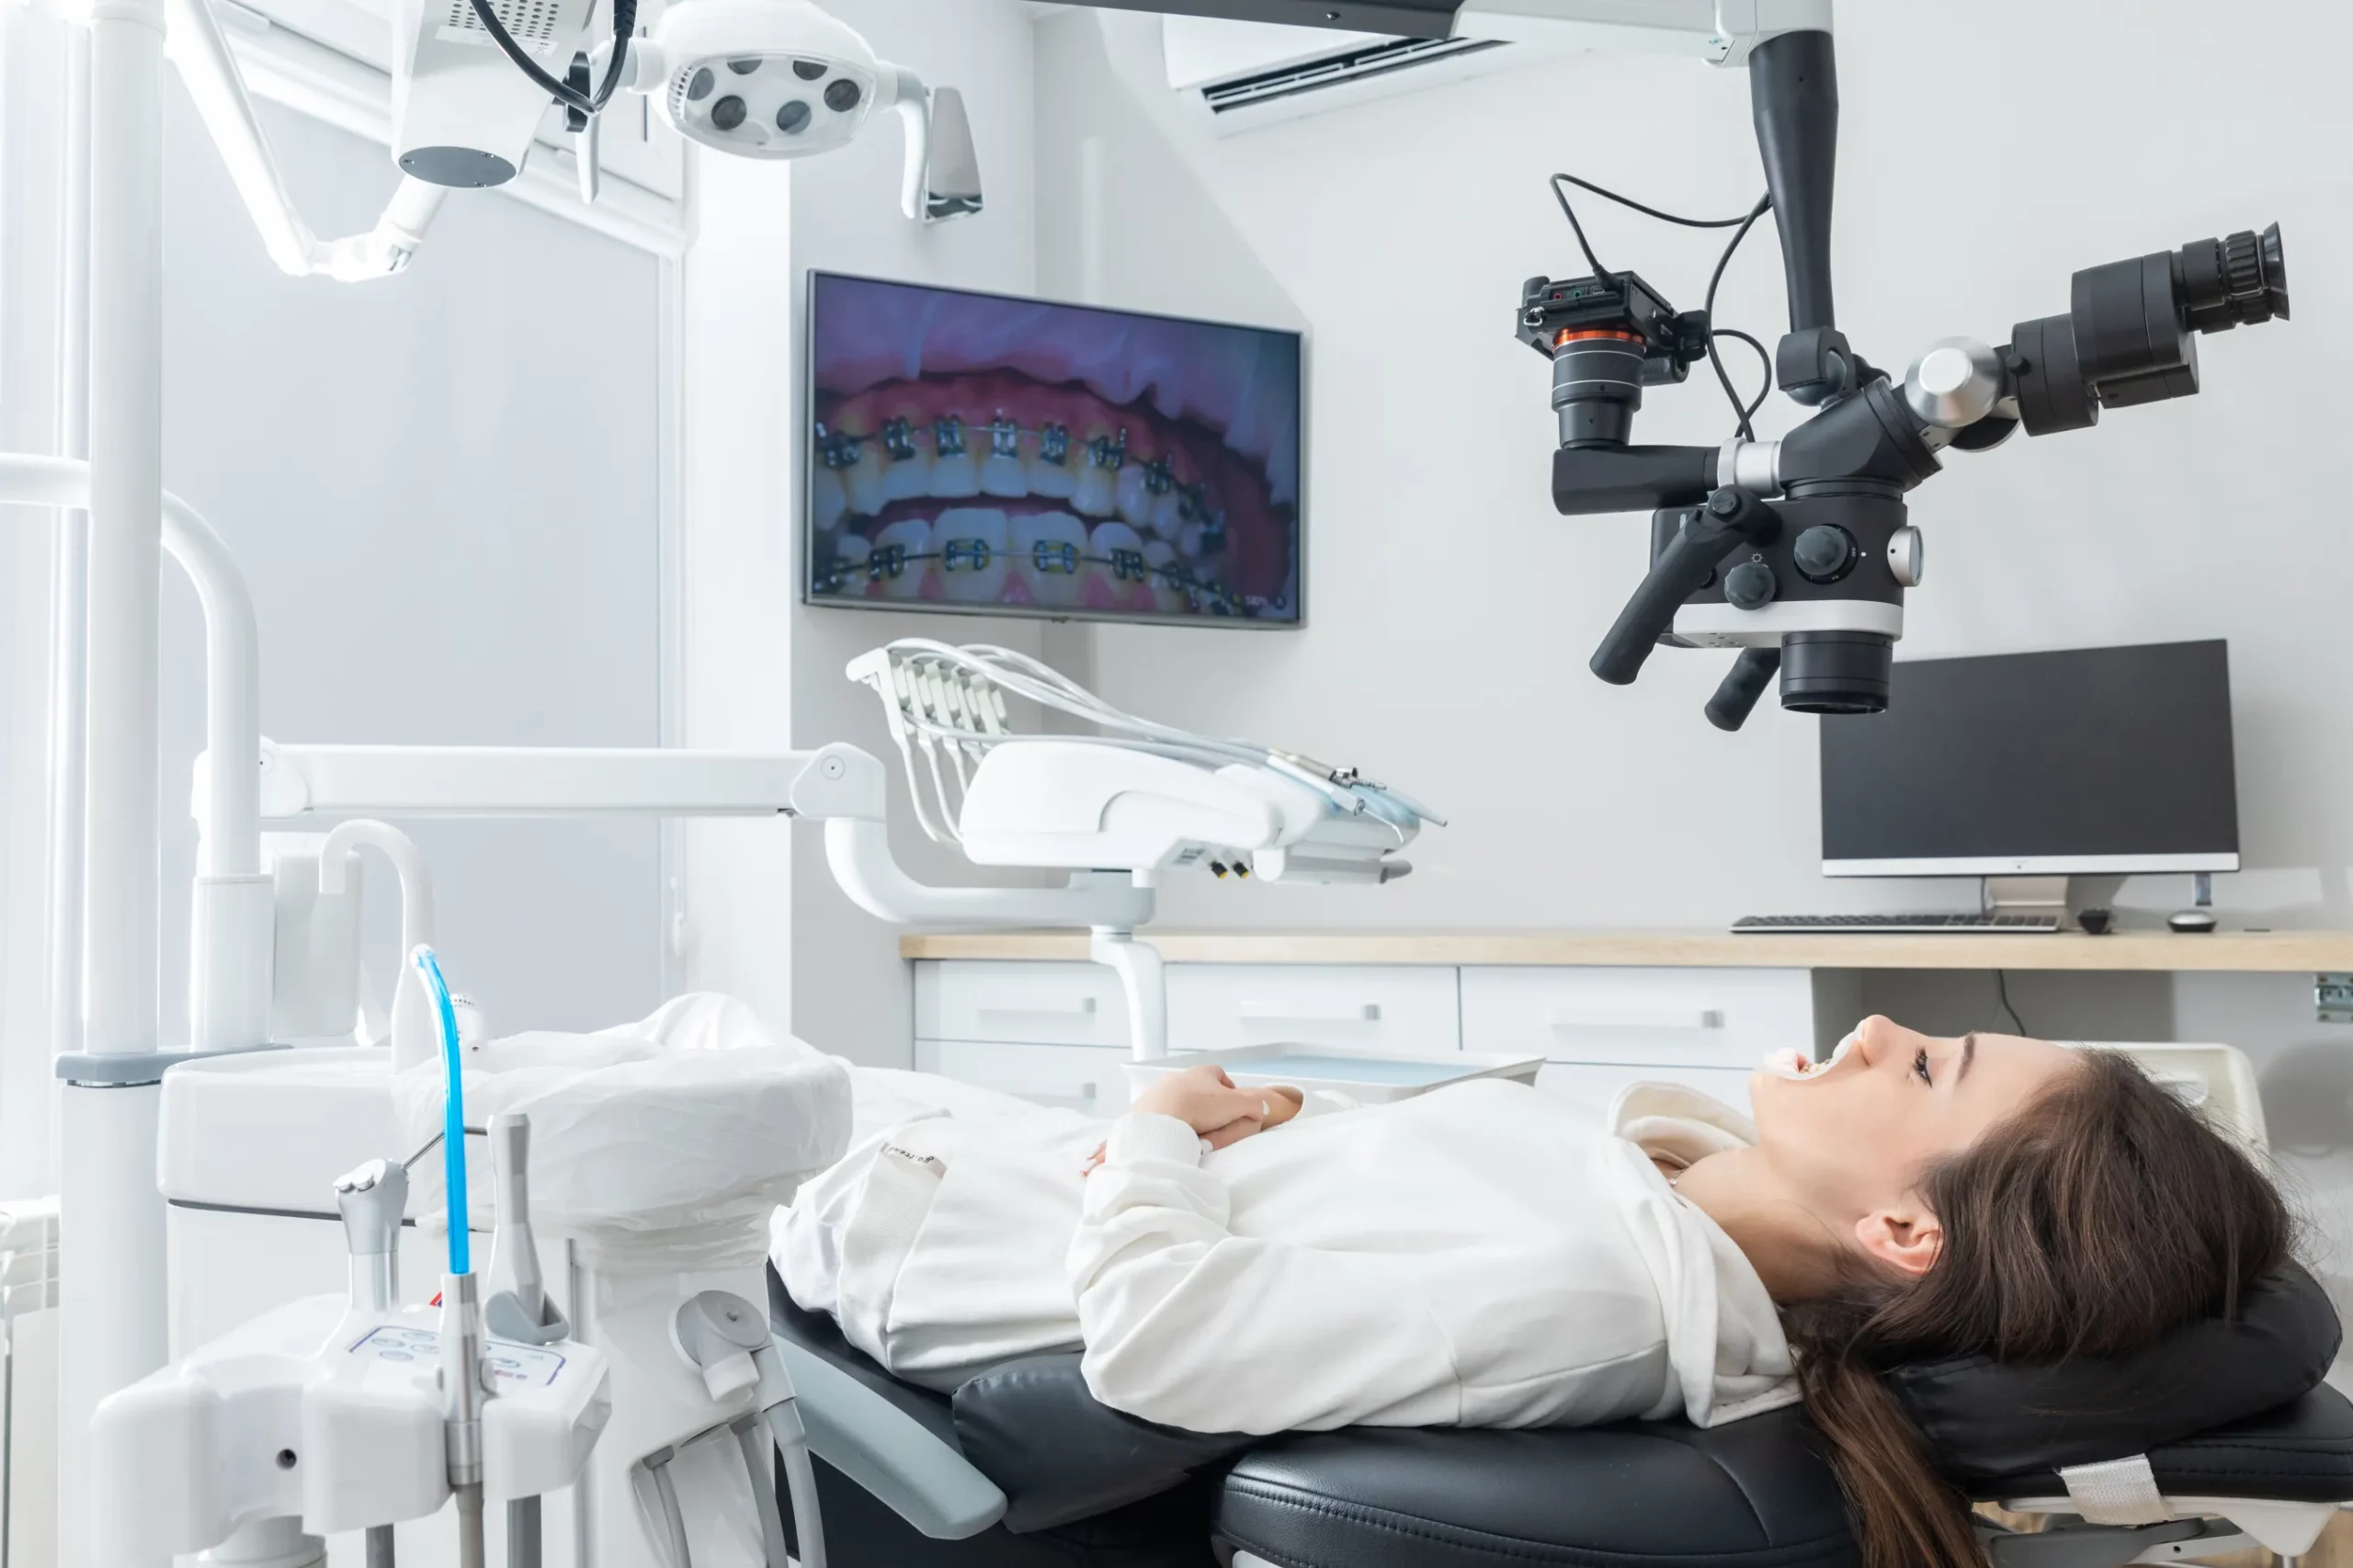 using-dental-microscope-treating-patient-teeth-dental-clinic-office-medicine-dentistry-health-care-concept-dental-equipment